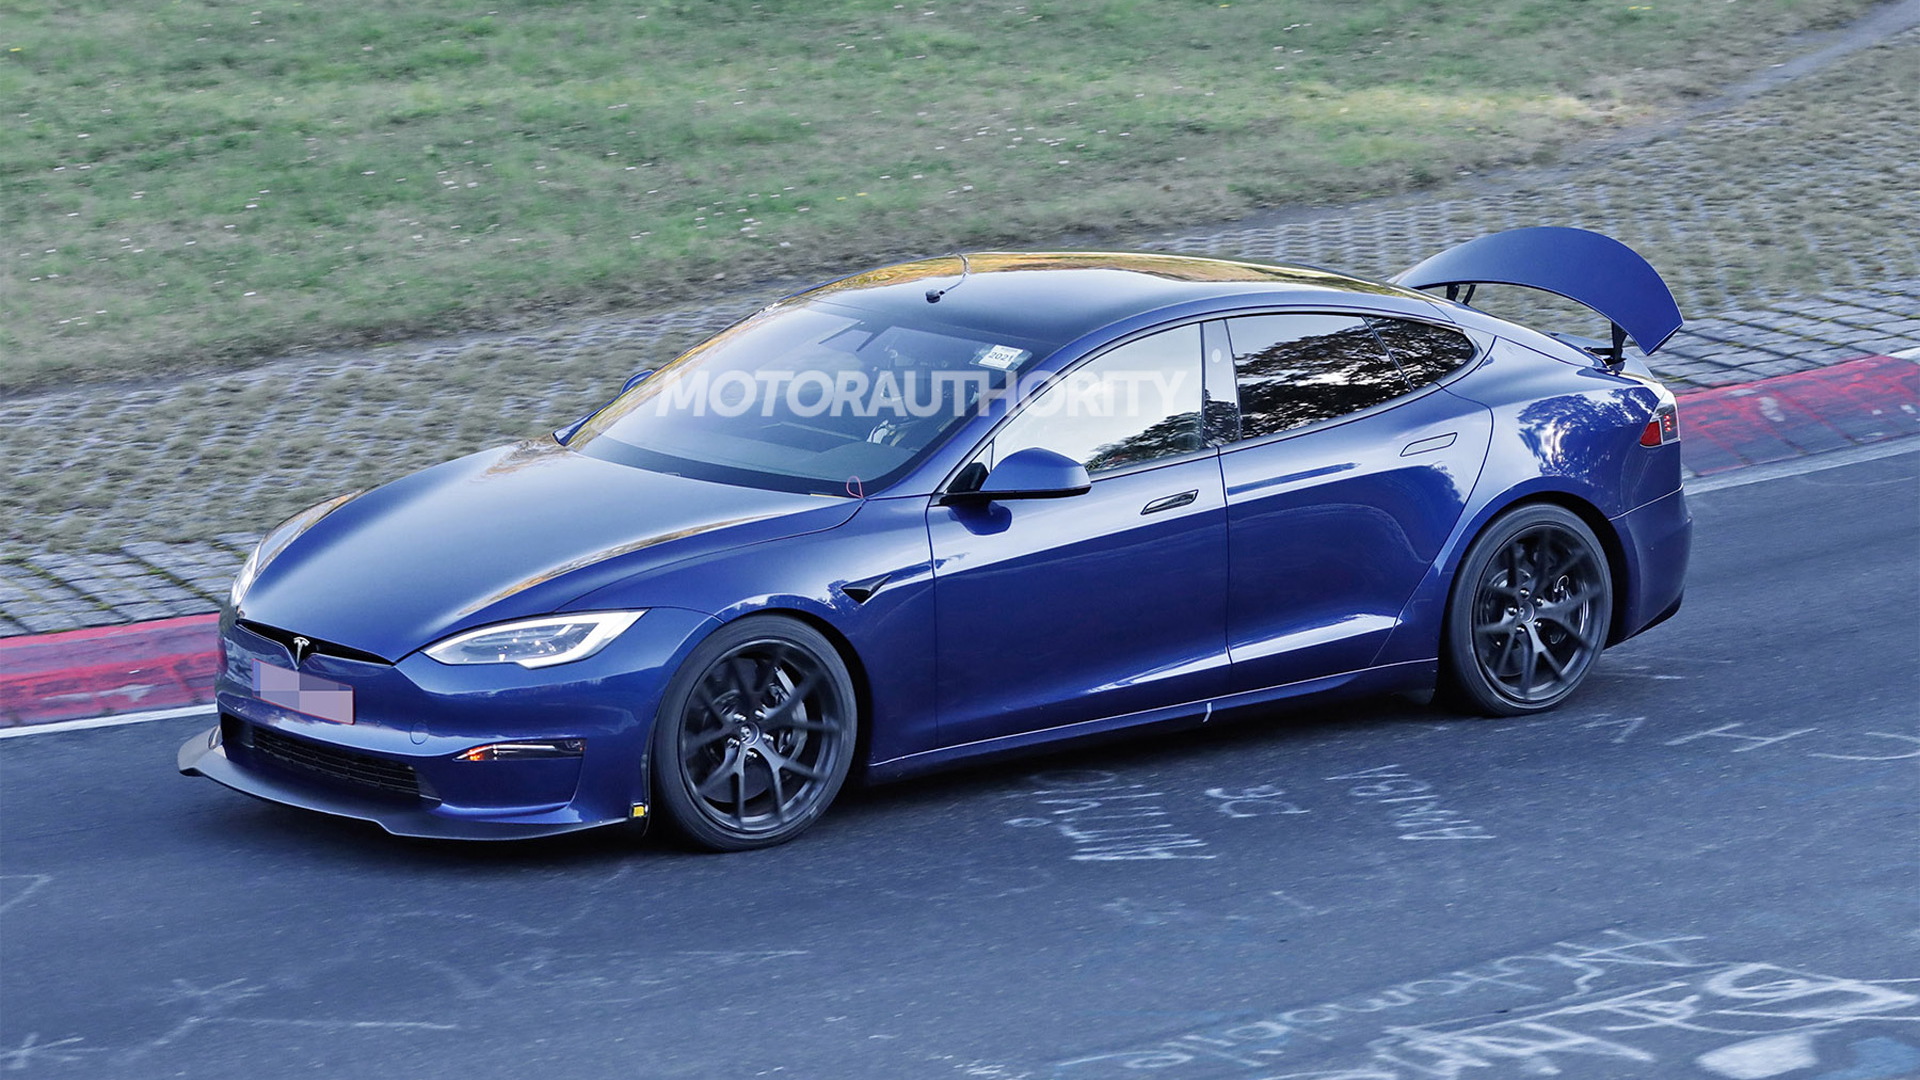 2021 Tesla Model S Plaid with active aero spy shots - Photo credit: S. Baldauf/SB-Medien